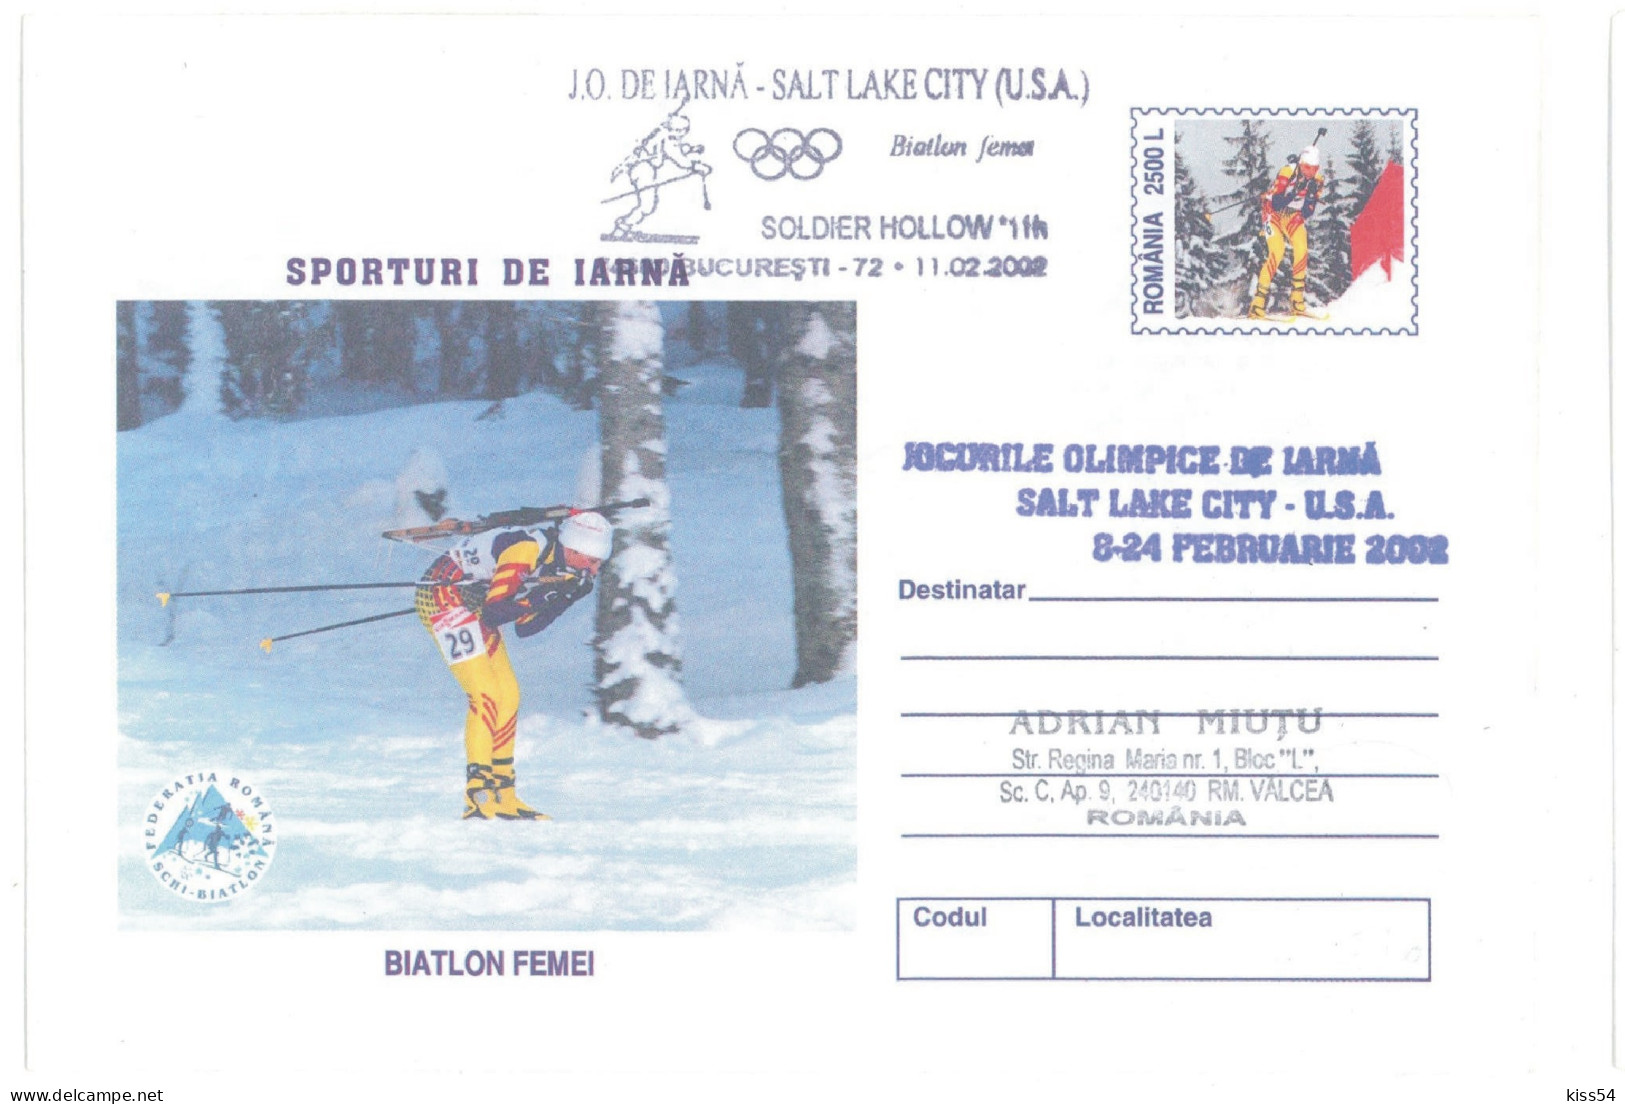 IP 2001 - 0232b U. S. A. SALT LAKE CITY 2002 - BIATHLON Women - Winter Olympic Games - Stationery - Used - 2001 - Winter 2002: Salt Lake City